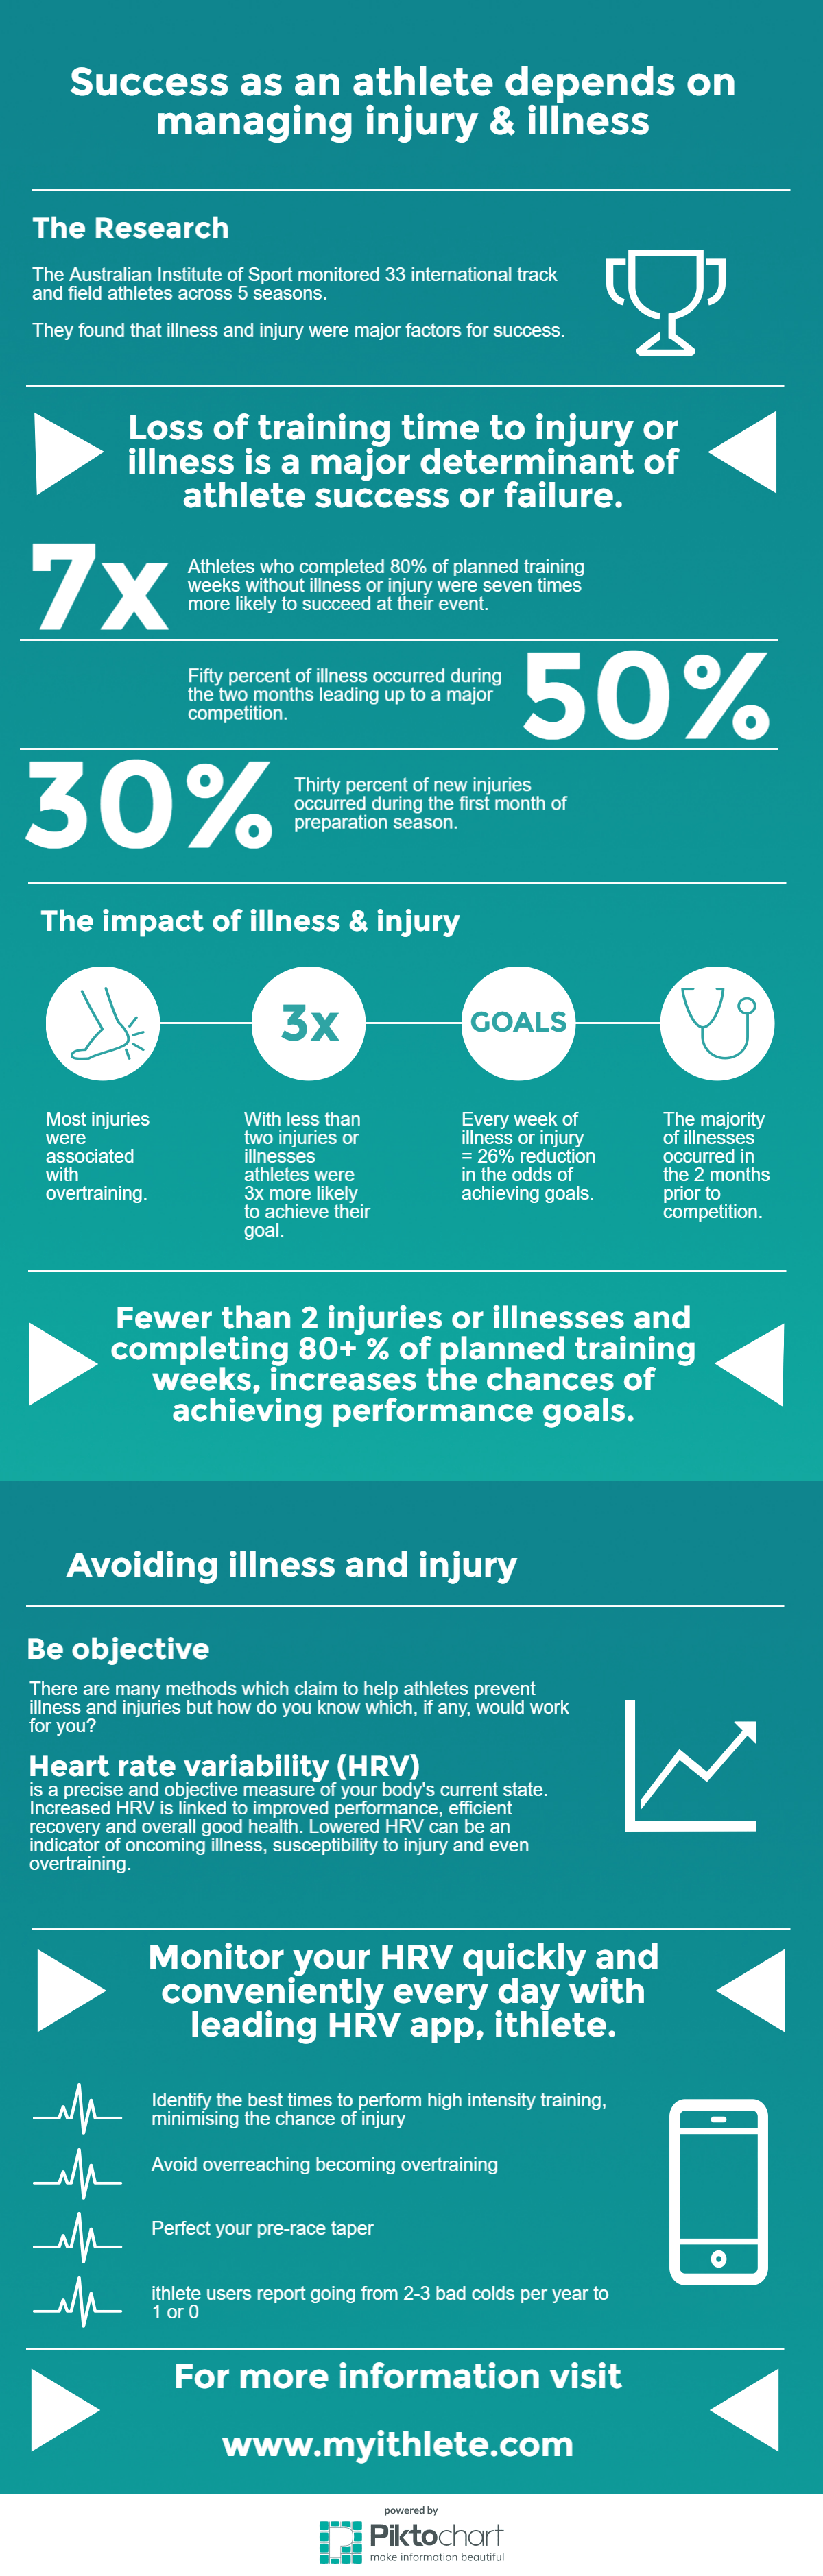 injury and illness: success infographic